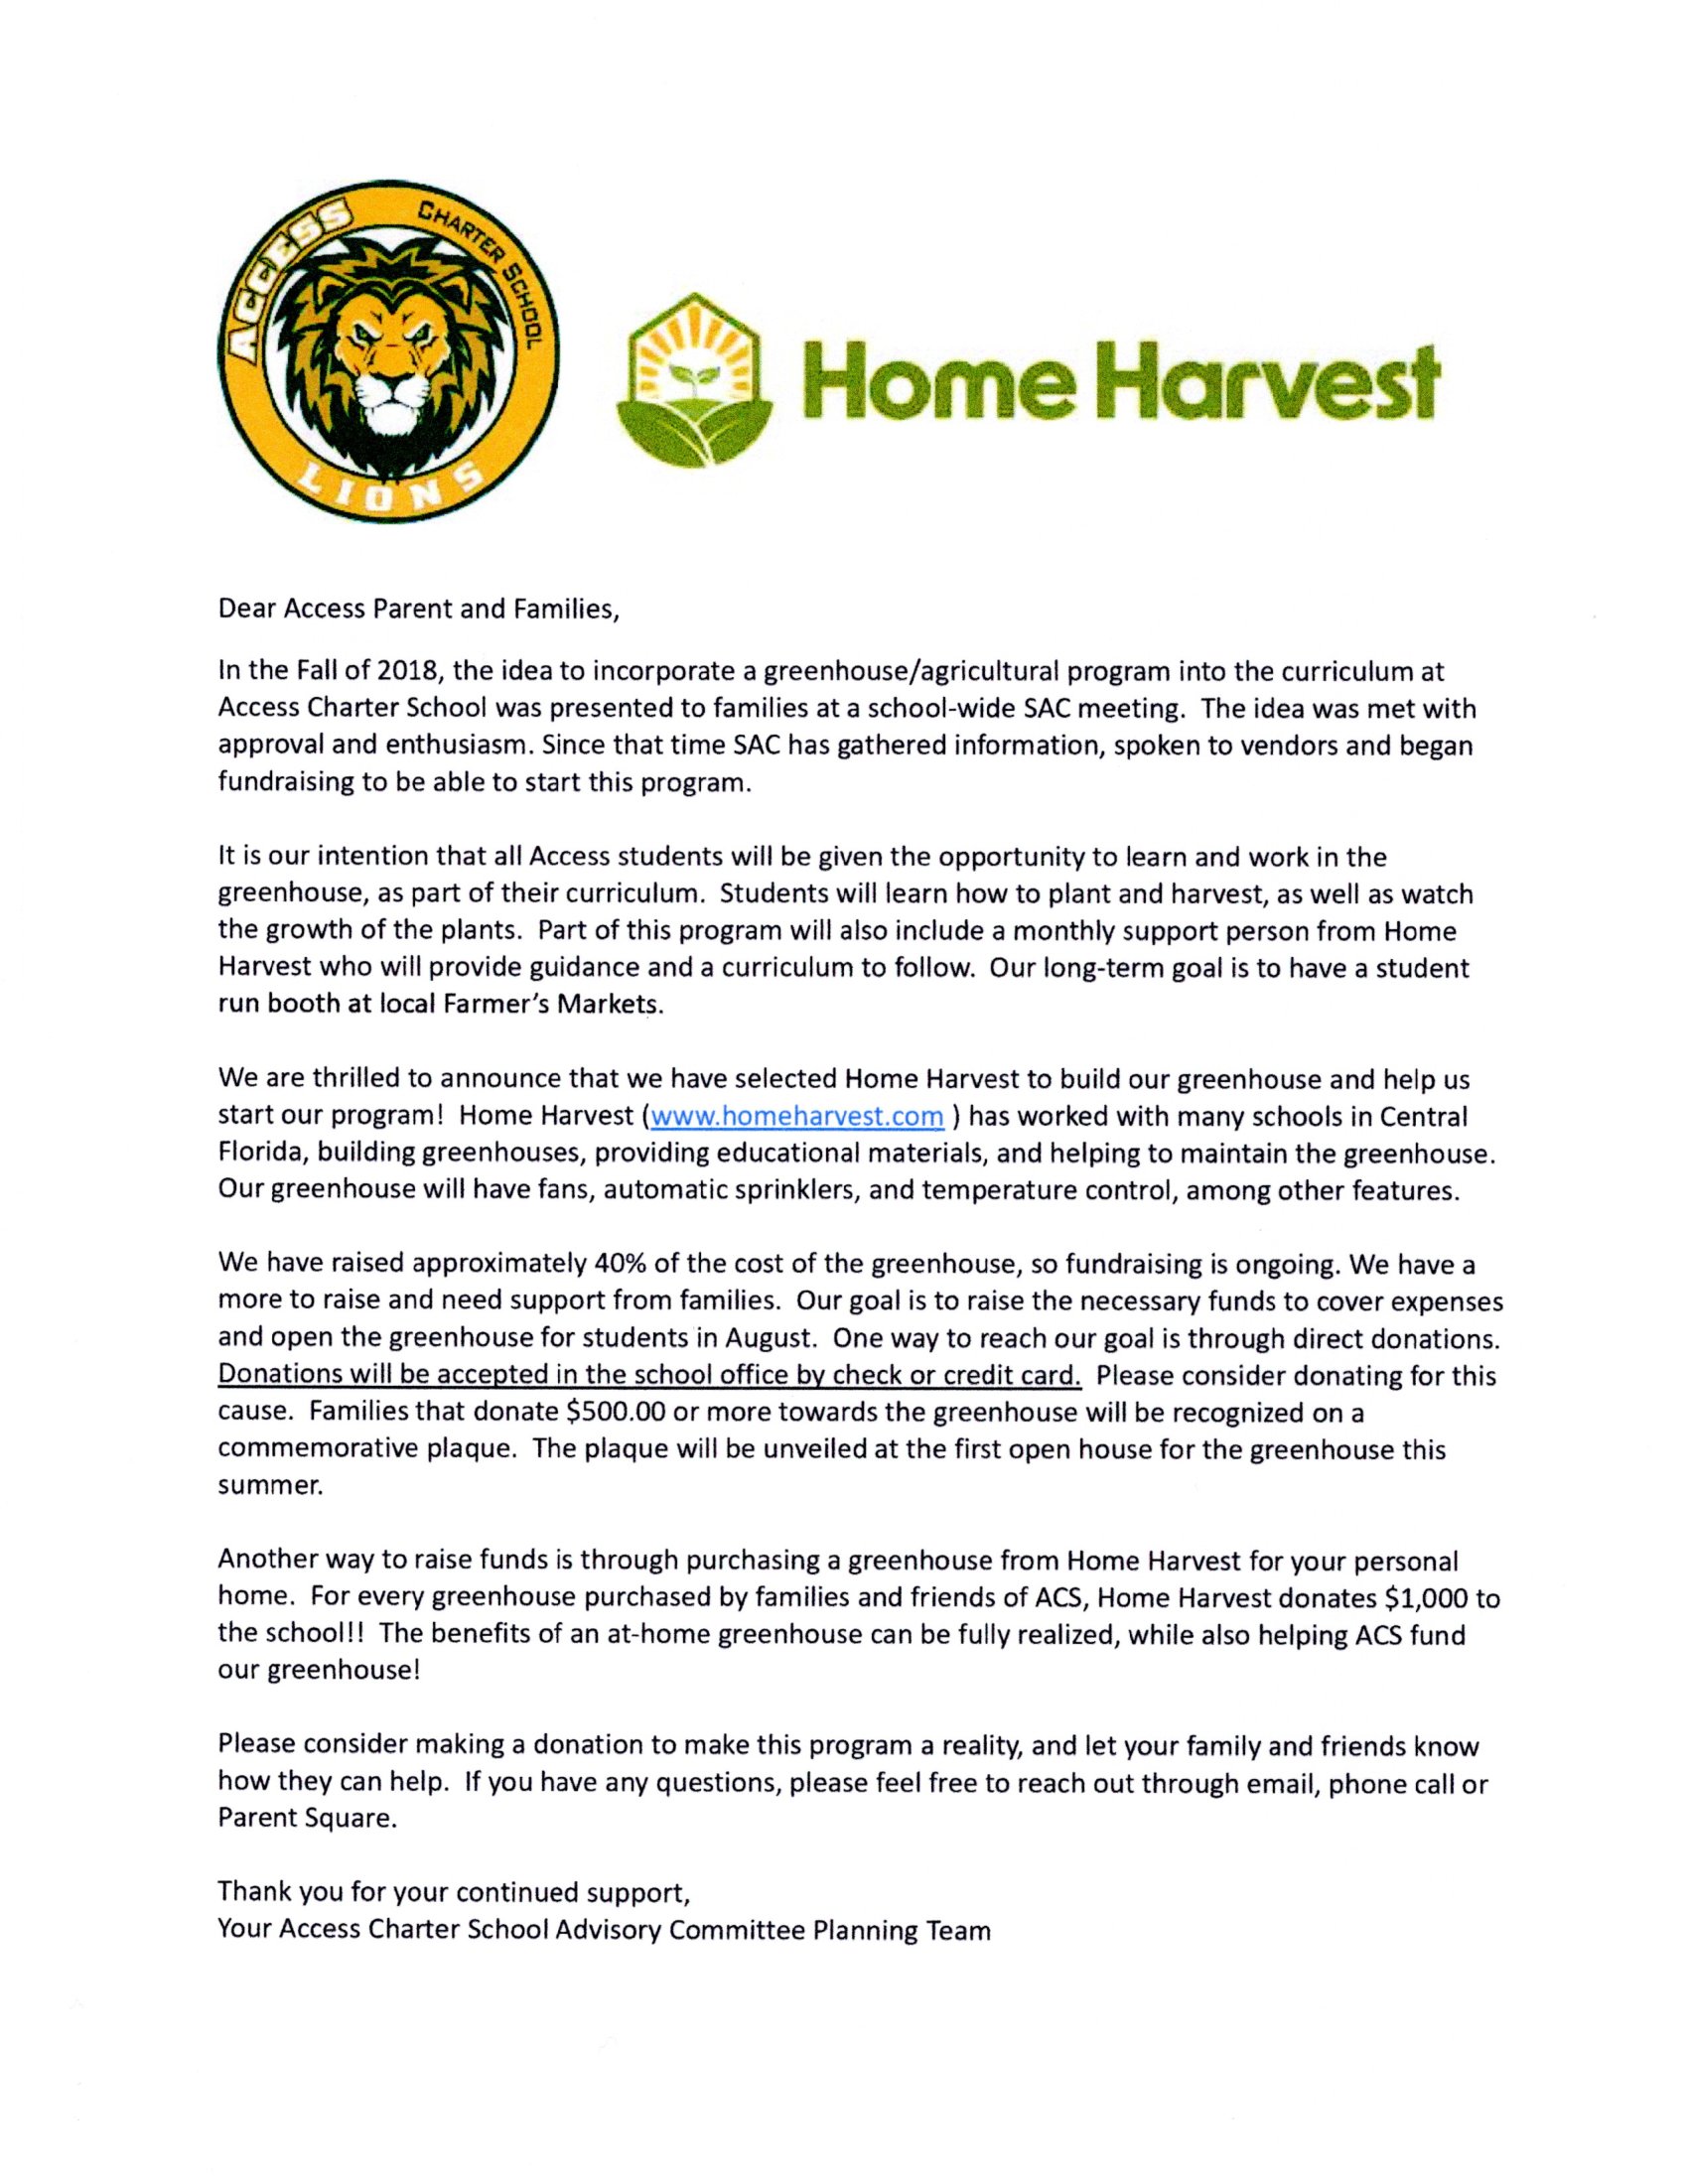 Home Harvest Letter